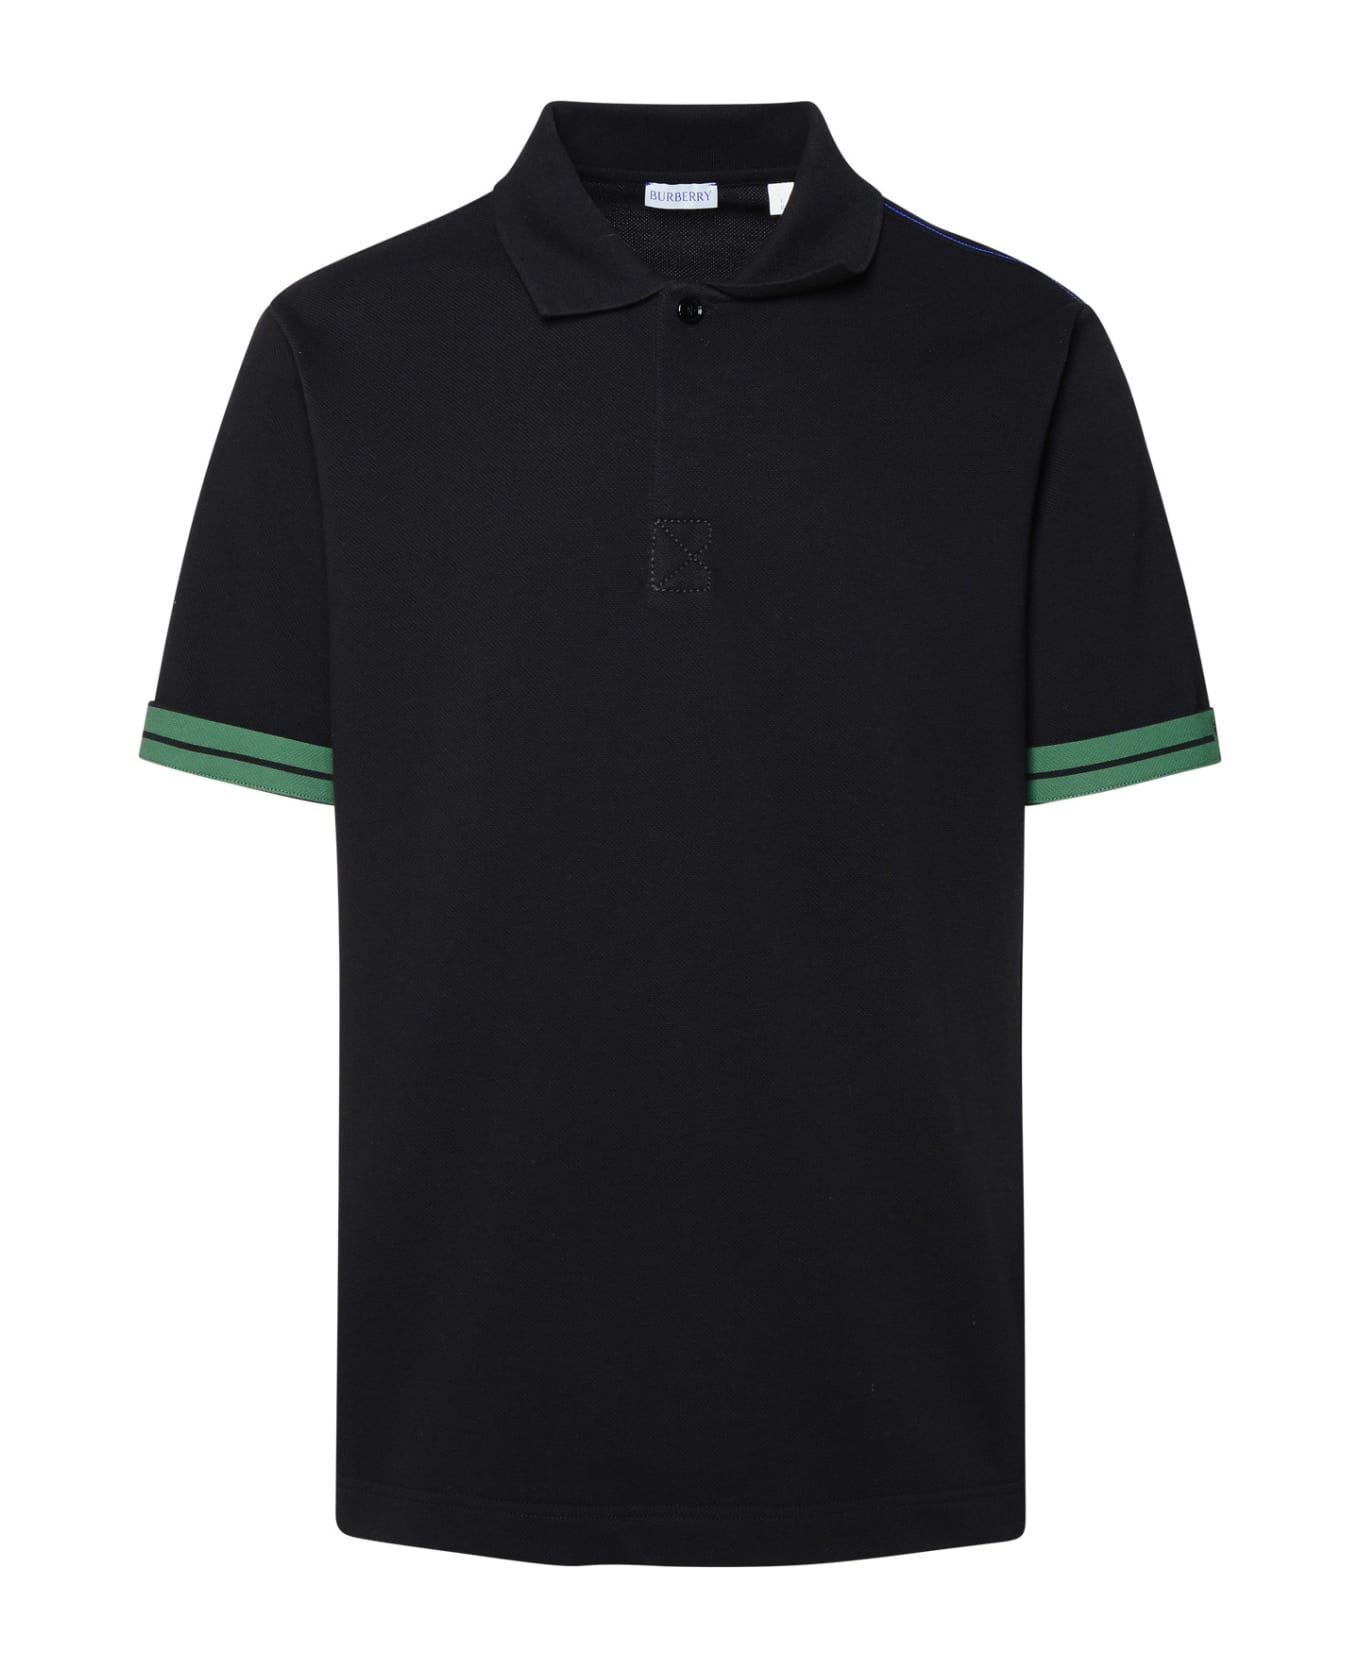 Burberry Black Cotton Polo Shirt - Black